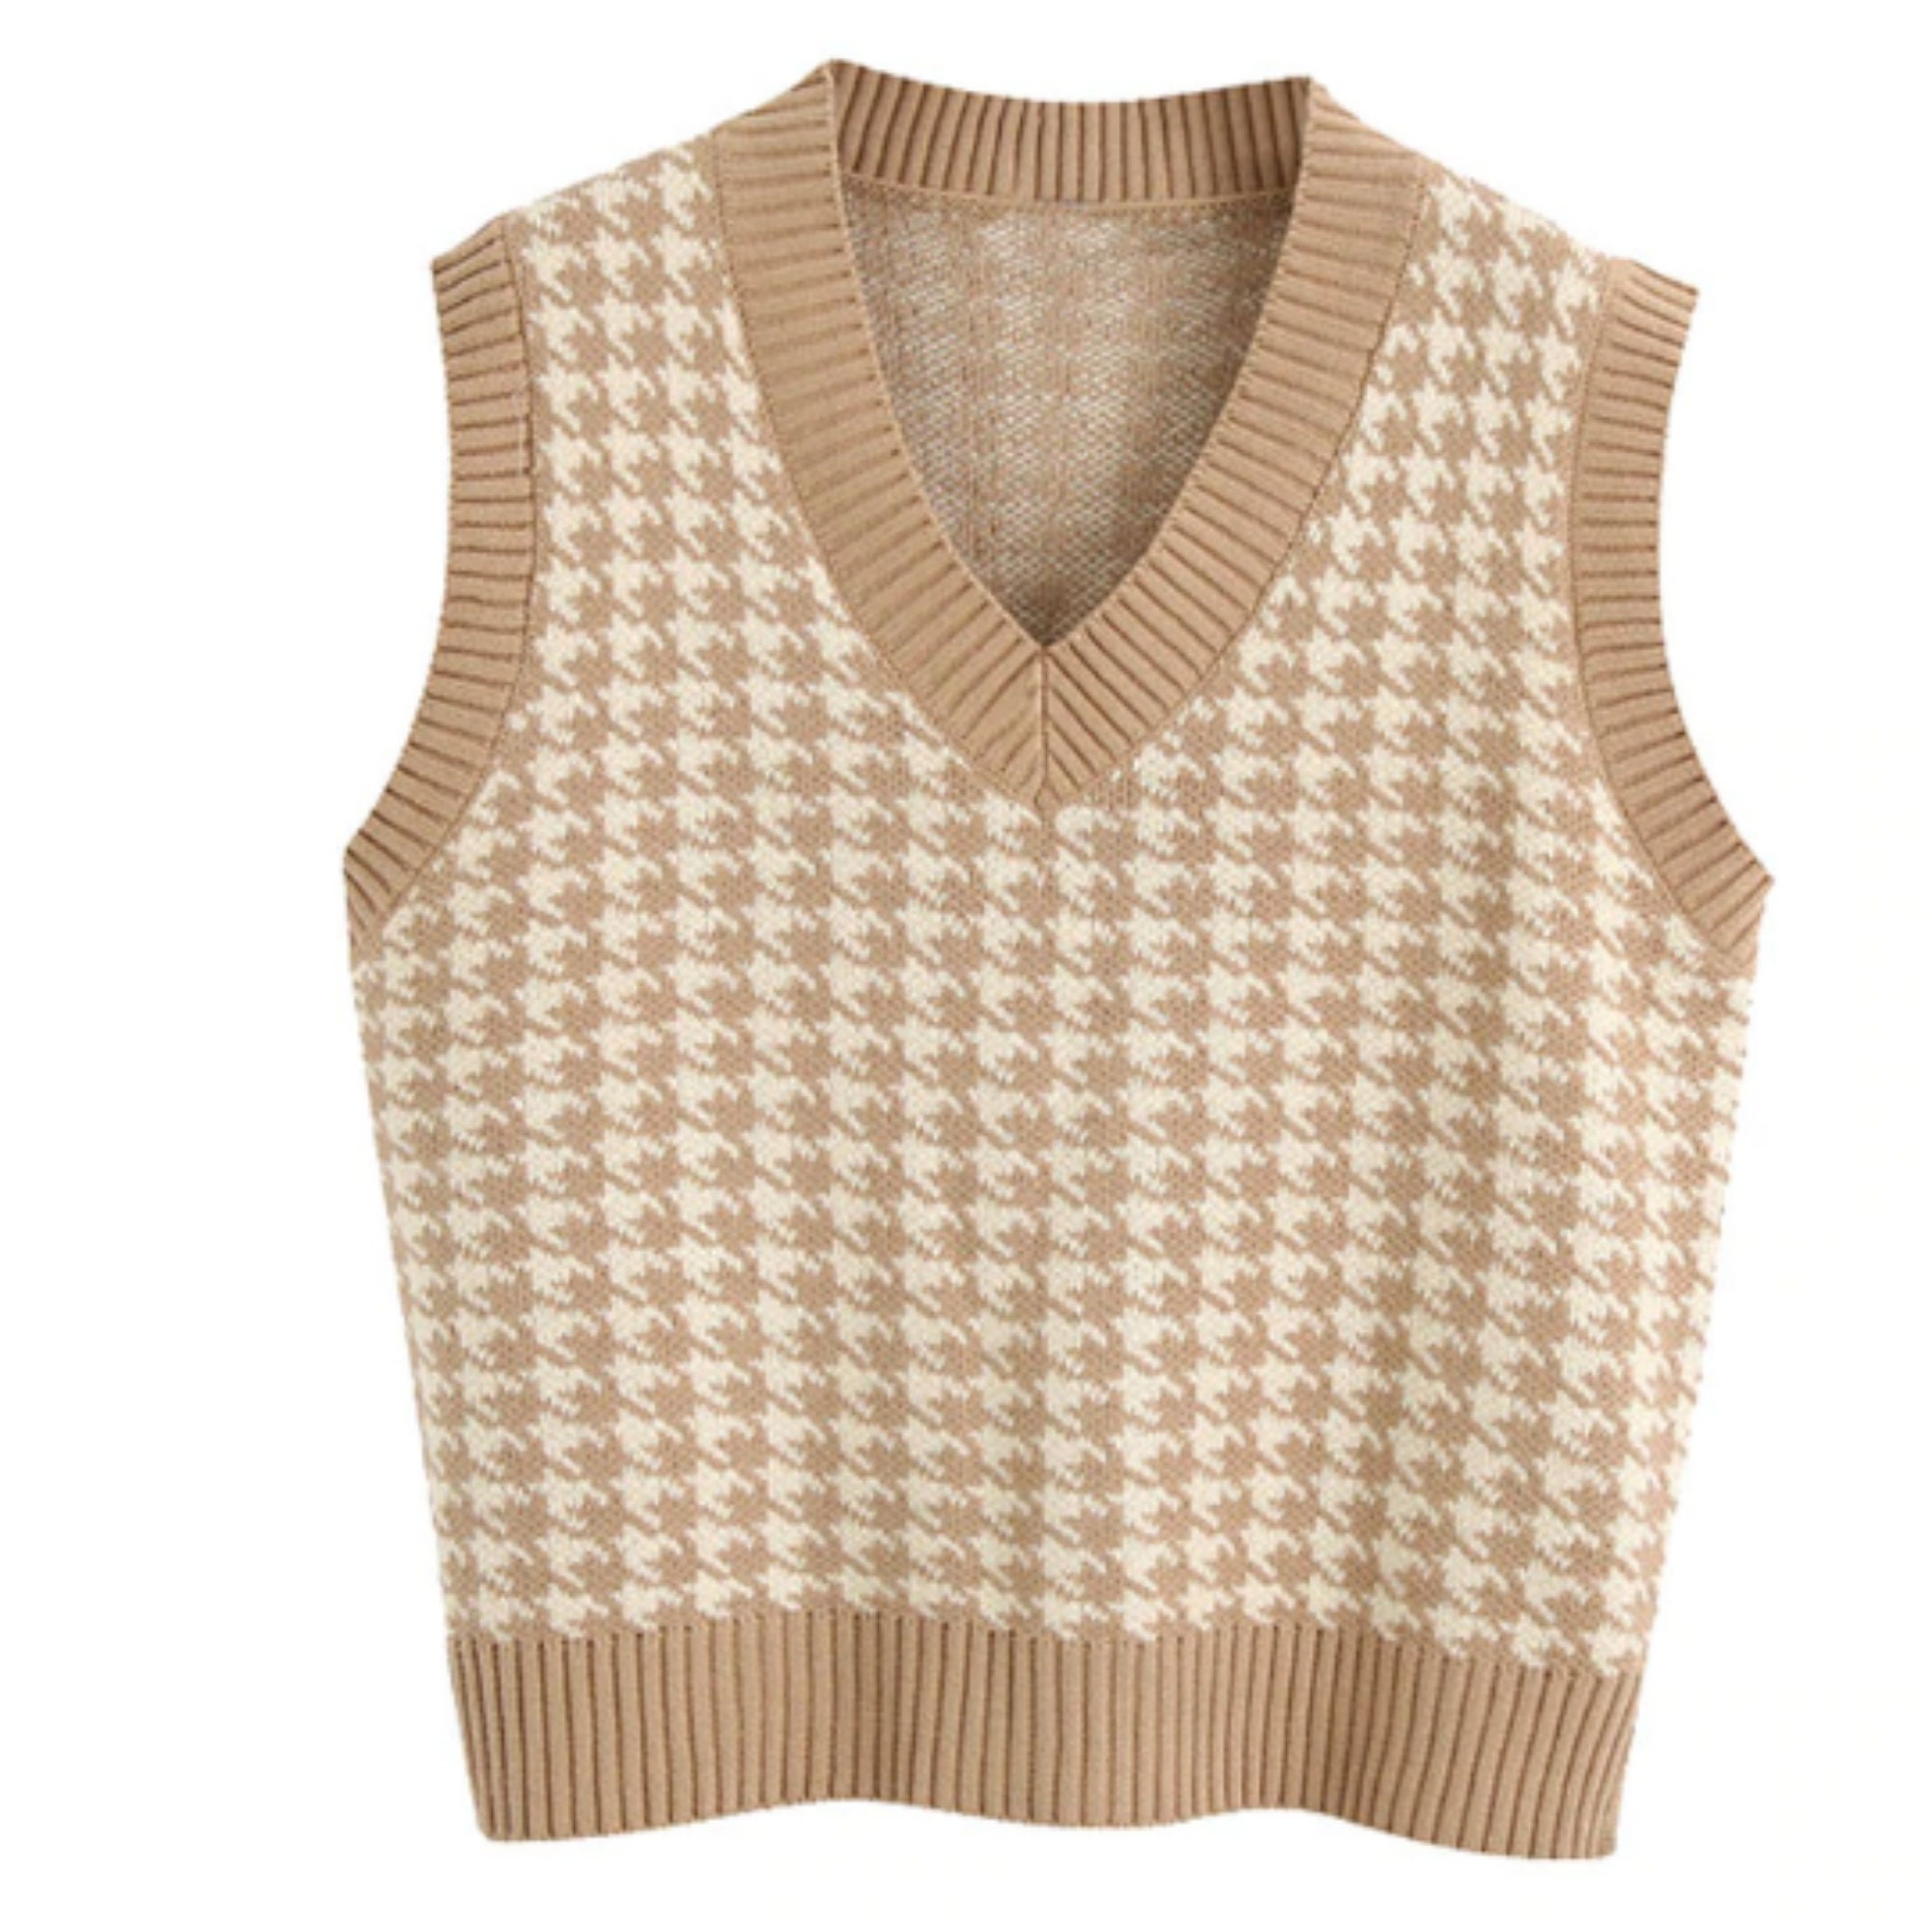 Houndstooth Loose Knitted Vest Sweater V Neck Sleeveless Side | Etsy